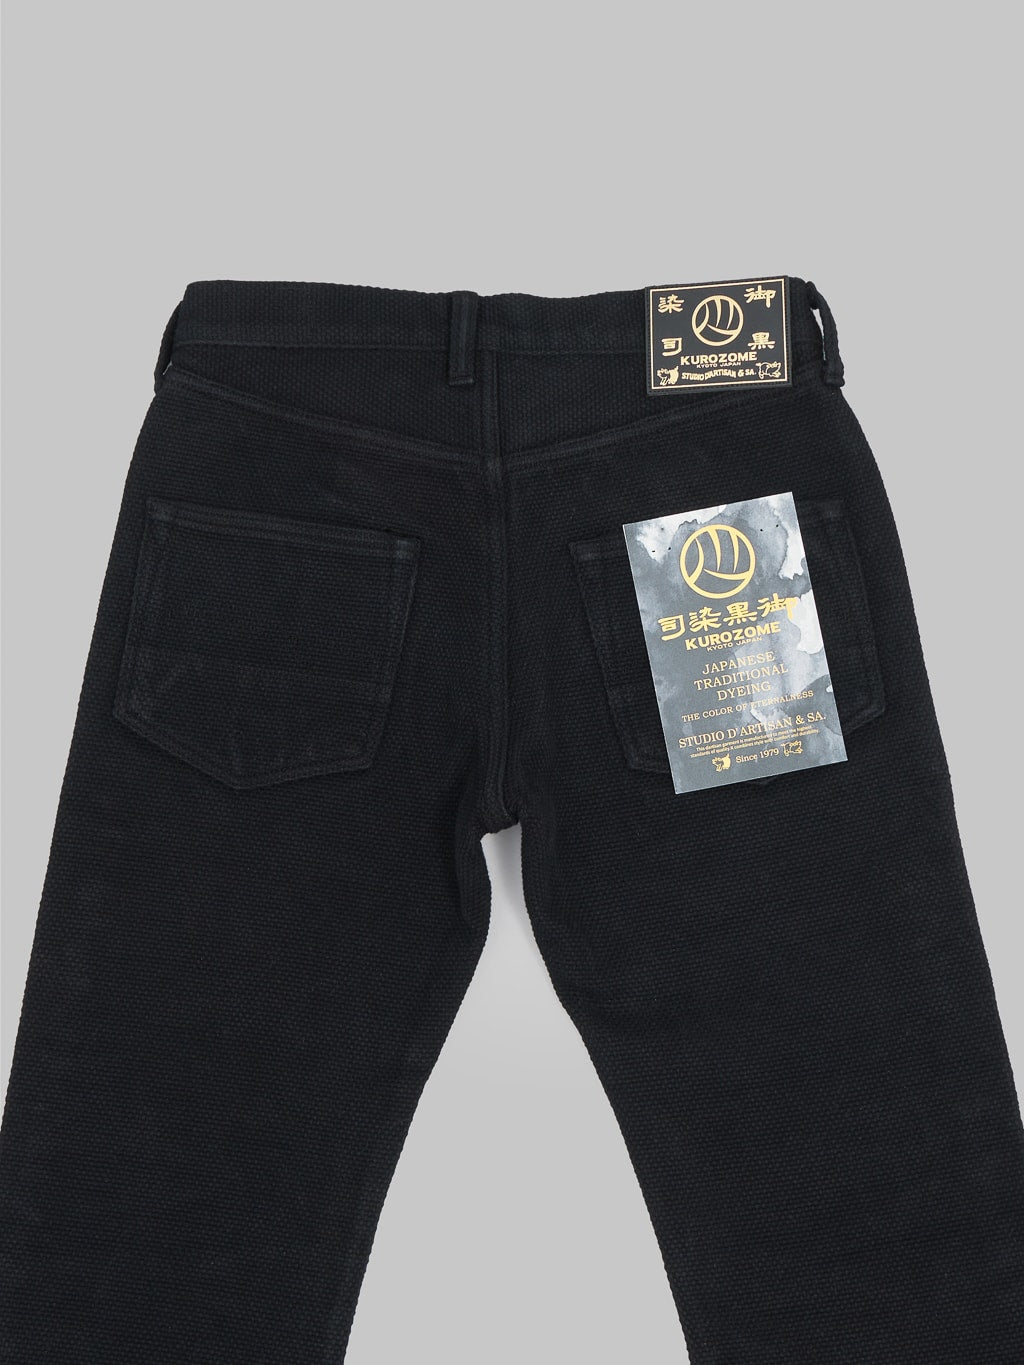 Studio DArtisan SD1877 Kurozome Black 14oz Sashiko Slim Straight Jeans back details